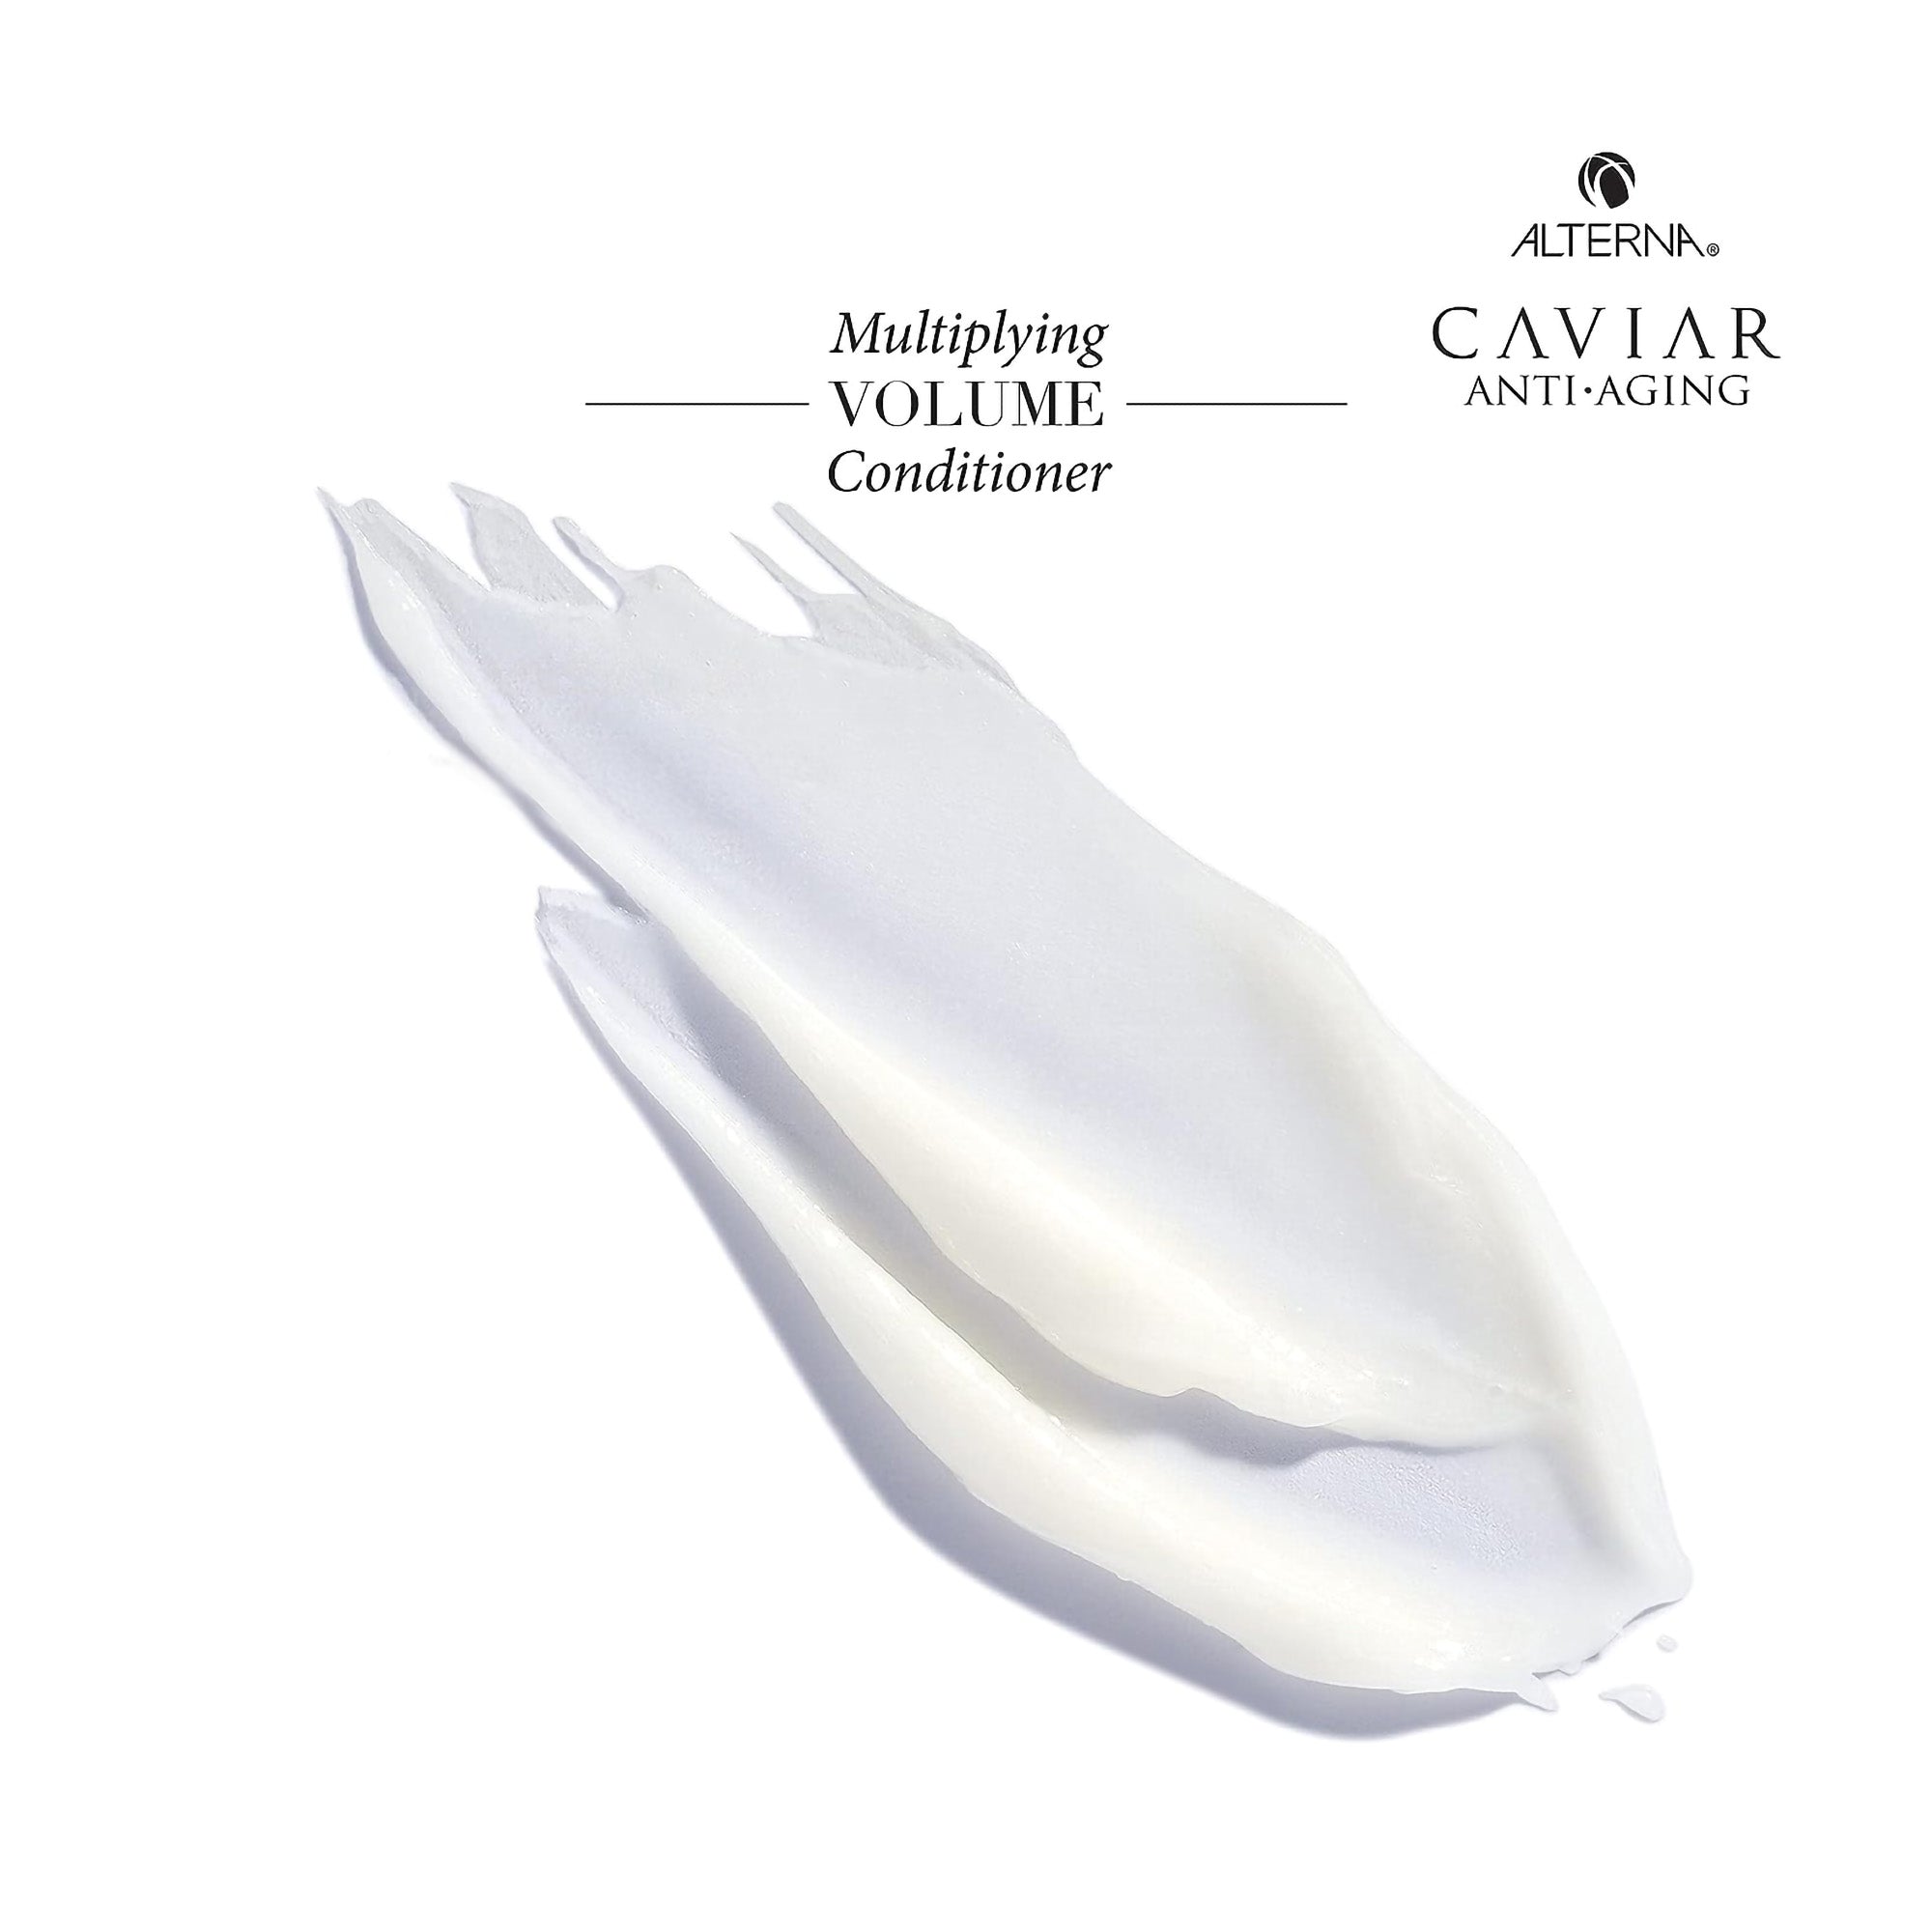 Alterna Caviar Anti-Aging Multiplying Volume Conditioner / 16.5OZ